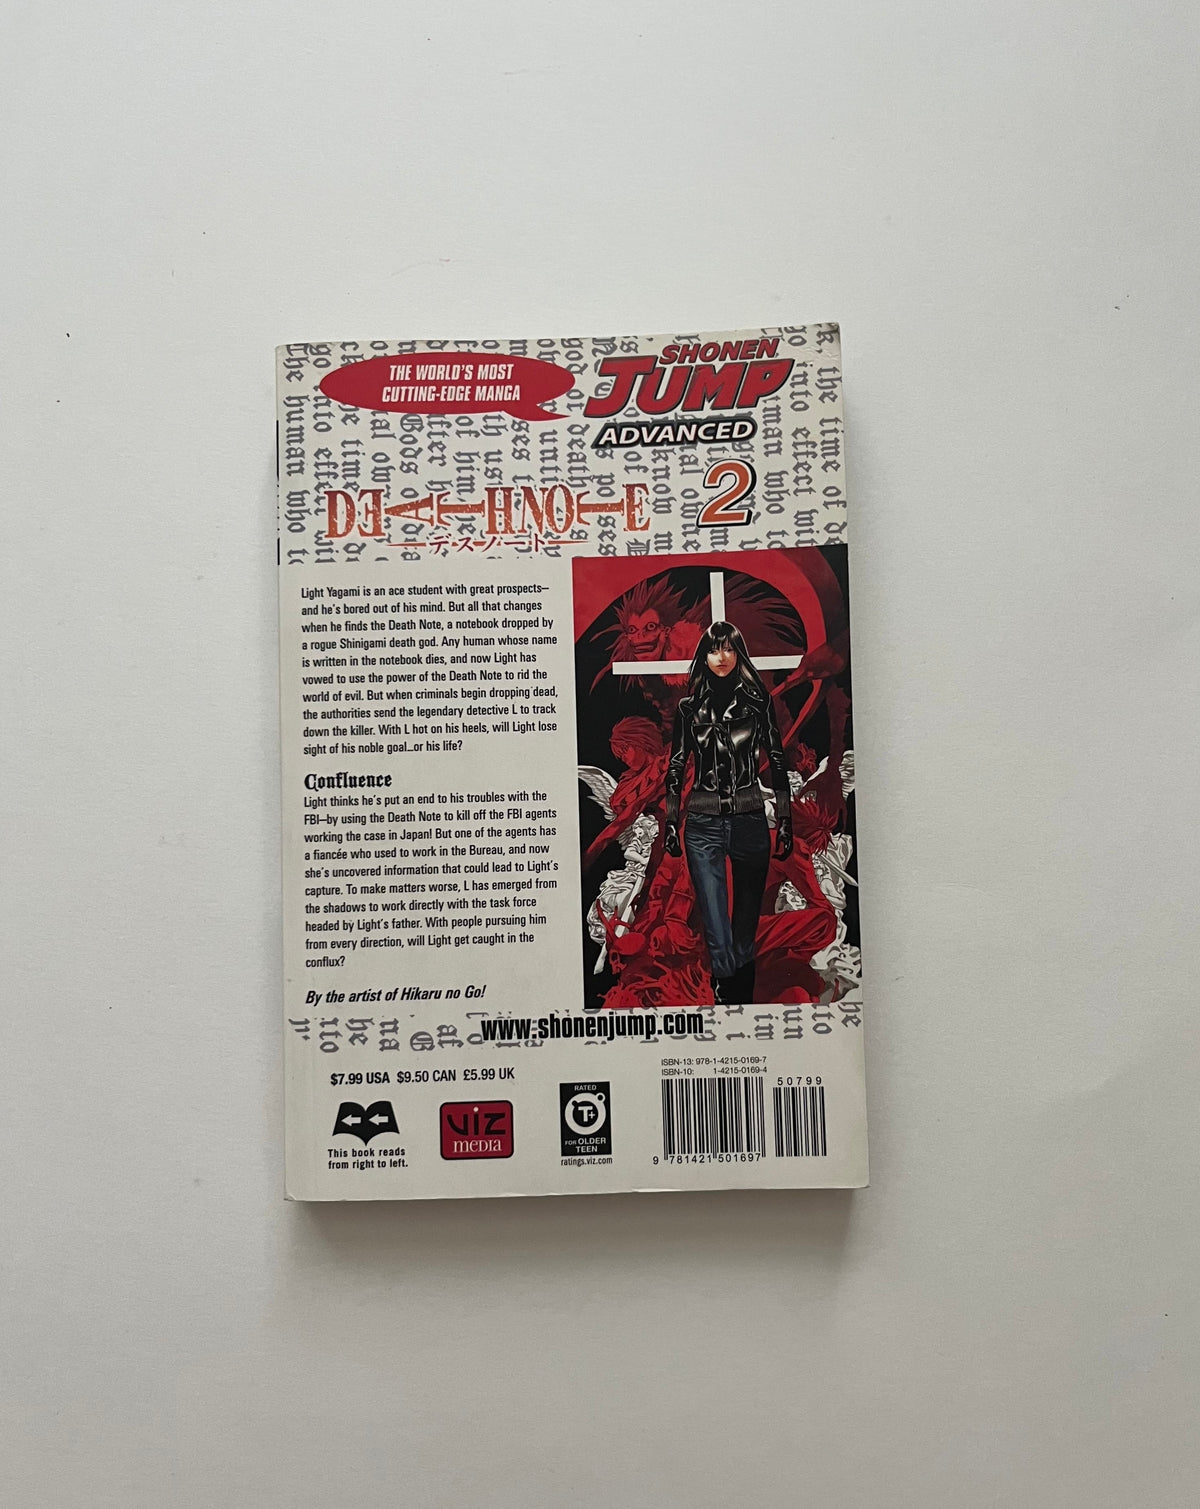 Deathnote 2 by Tsugumi Ohba &amp; Takeshi Obata